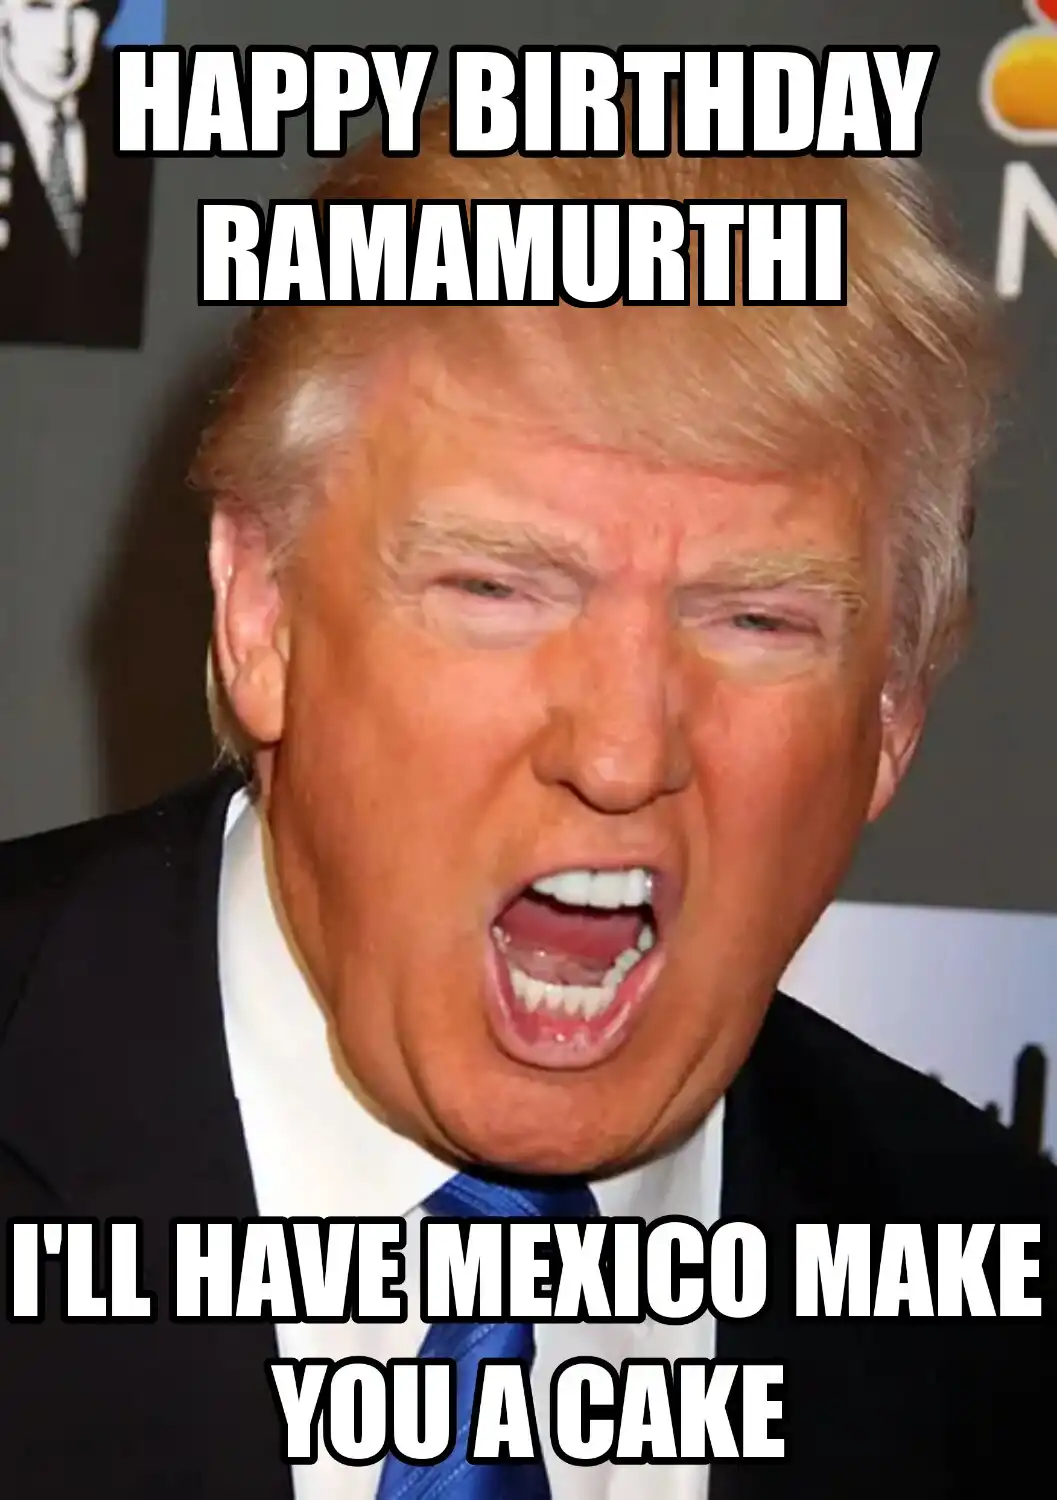 Happy Birthday Ramamurthi Mexico Make You A Cake Meme